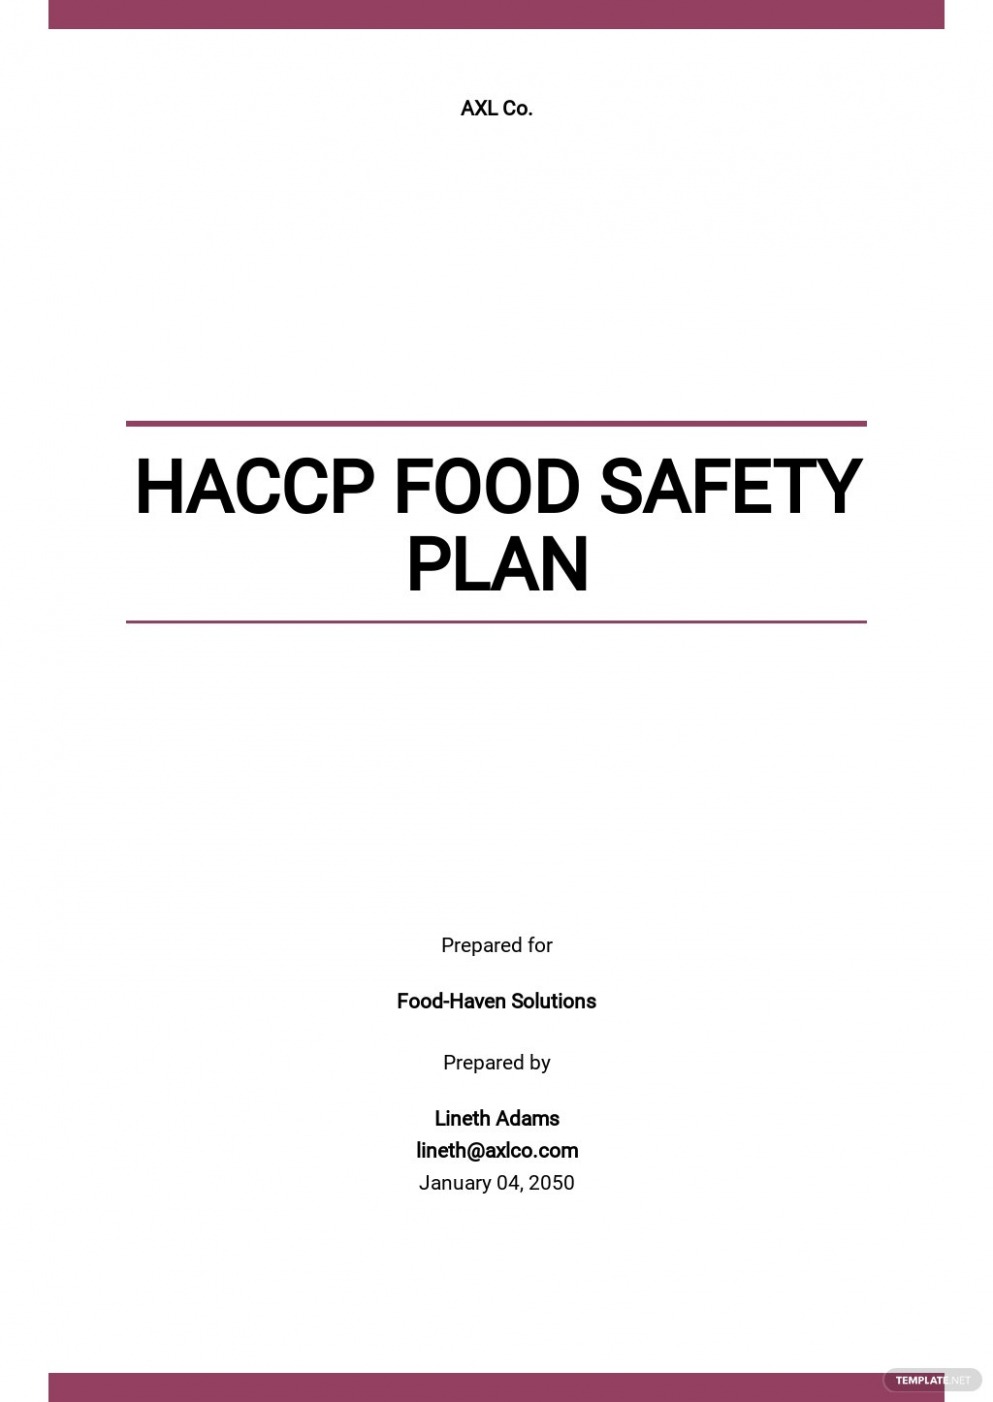 Free Food Safety Plan Template CSV